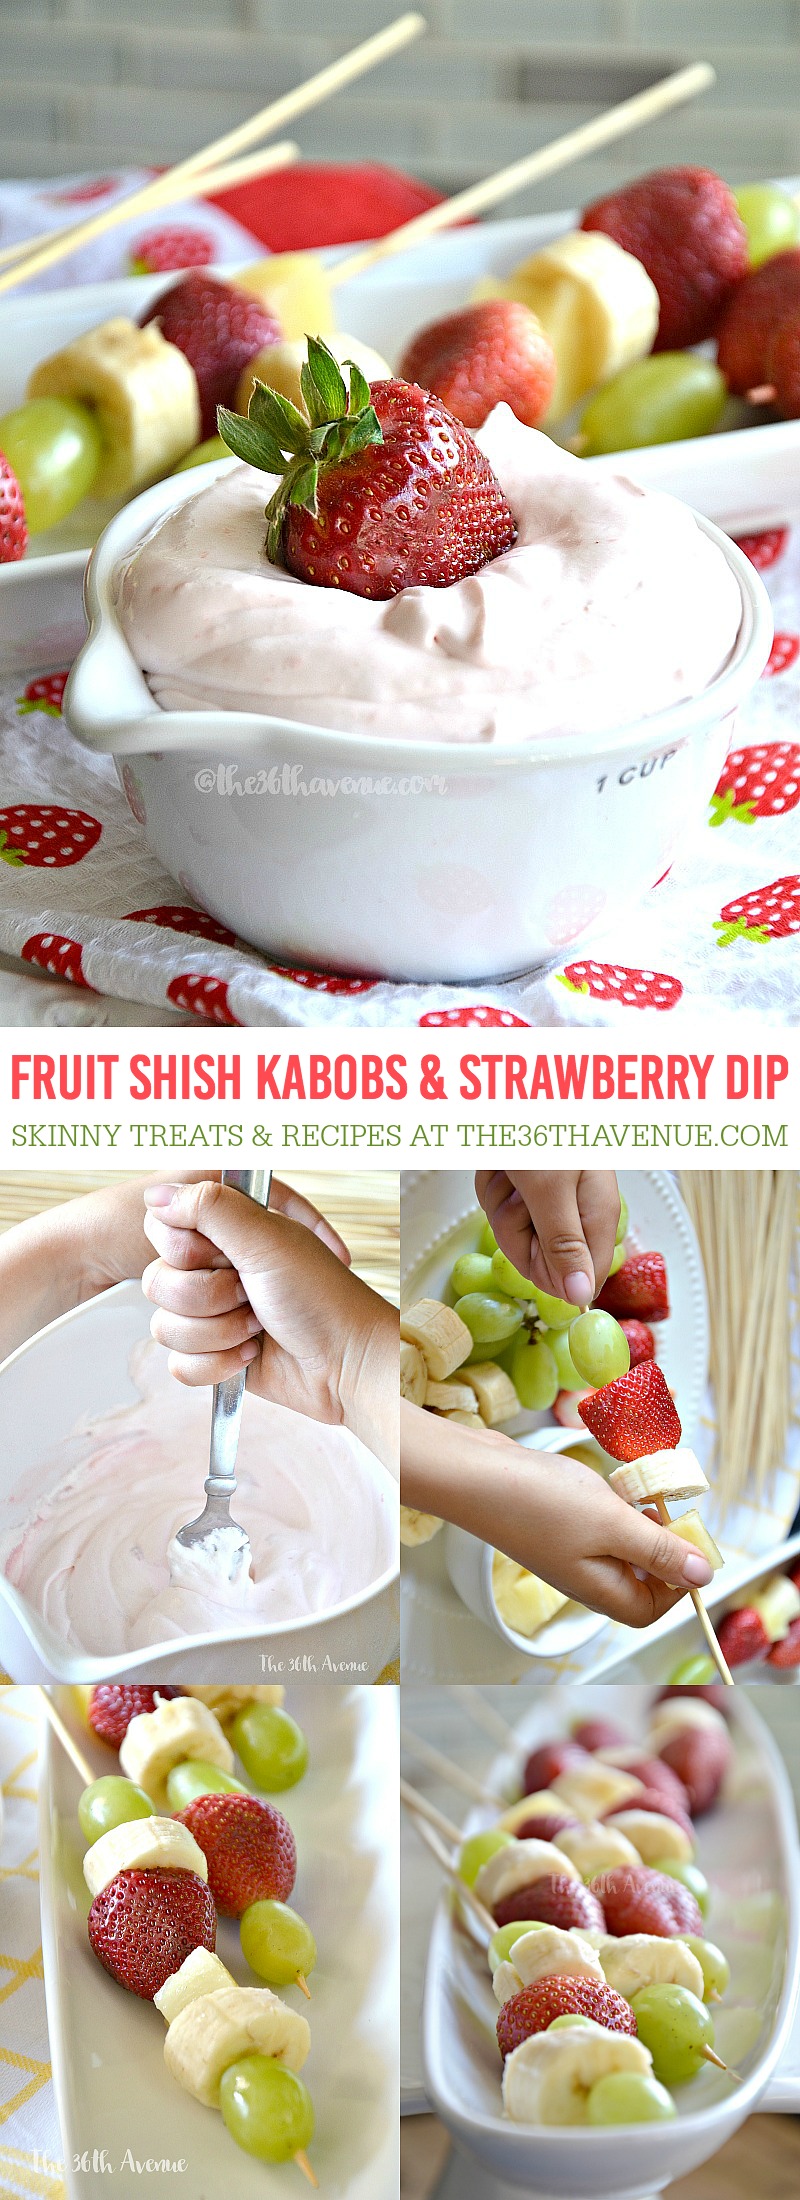 shish-kabobs-and-dip-recipe-at-the36thavenue-com